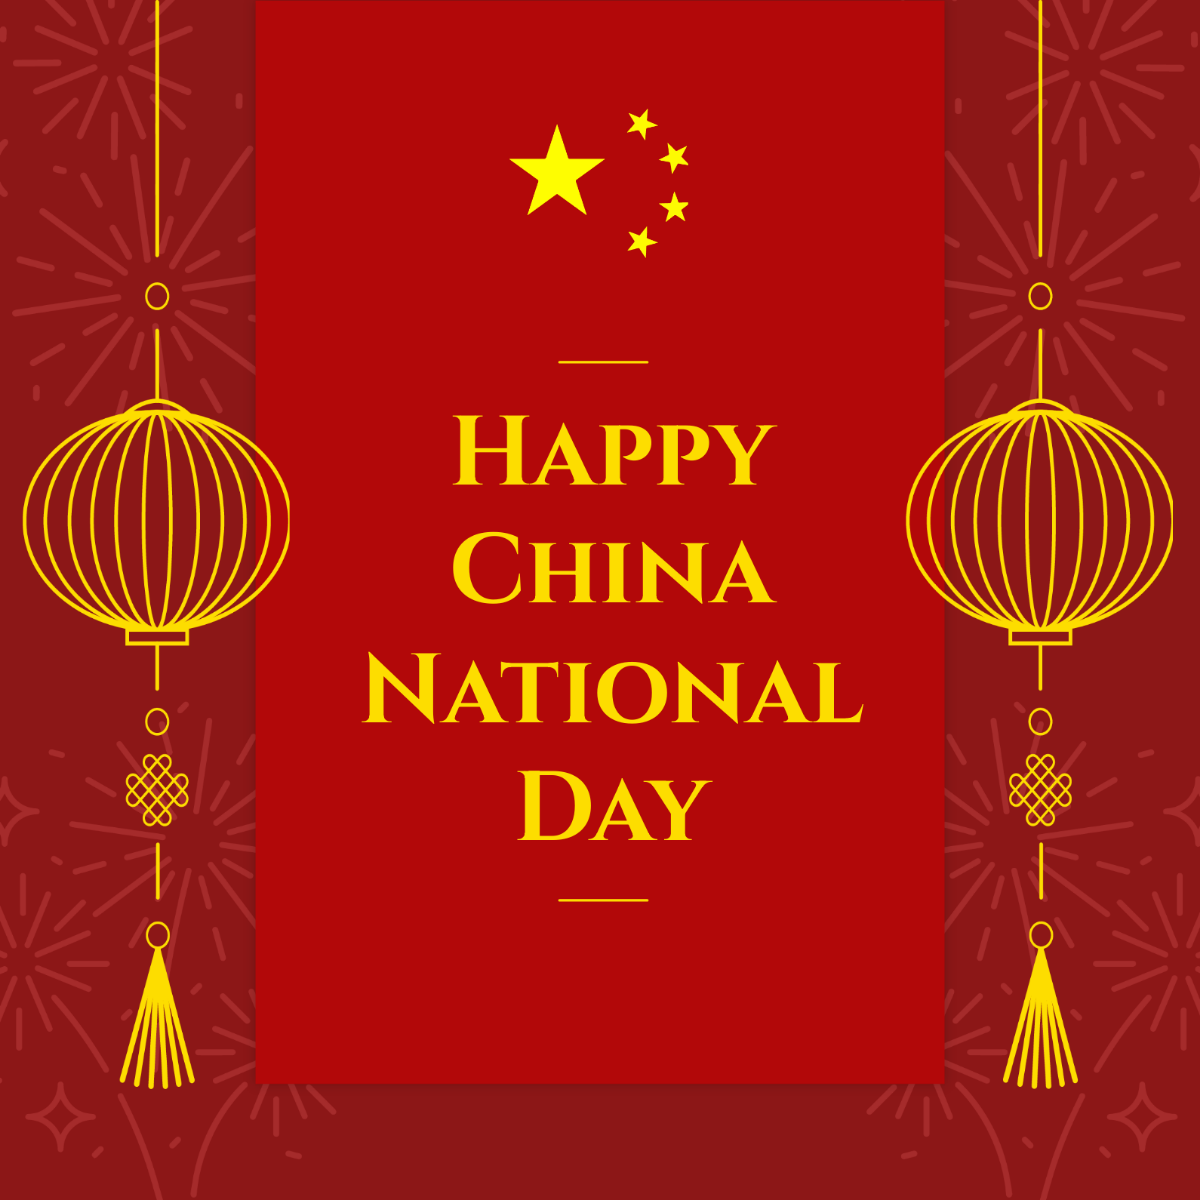 China National Day LinkedIn Post